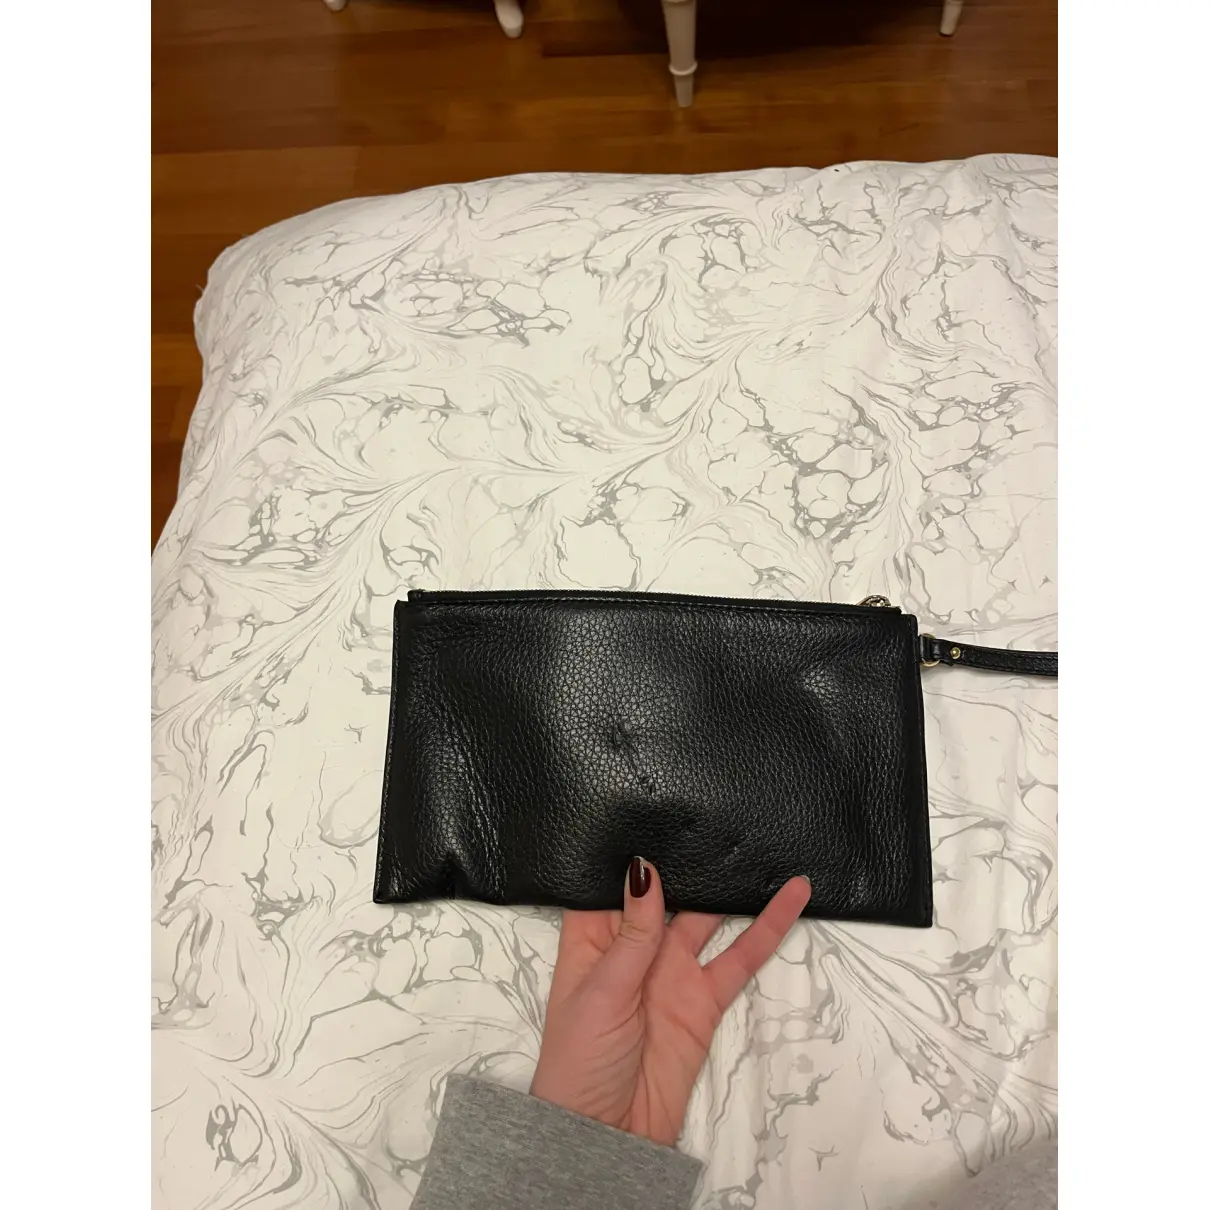 Buy Michael Kors Leather clutch bag online